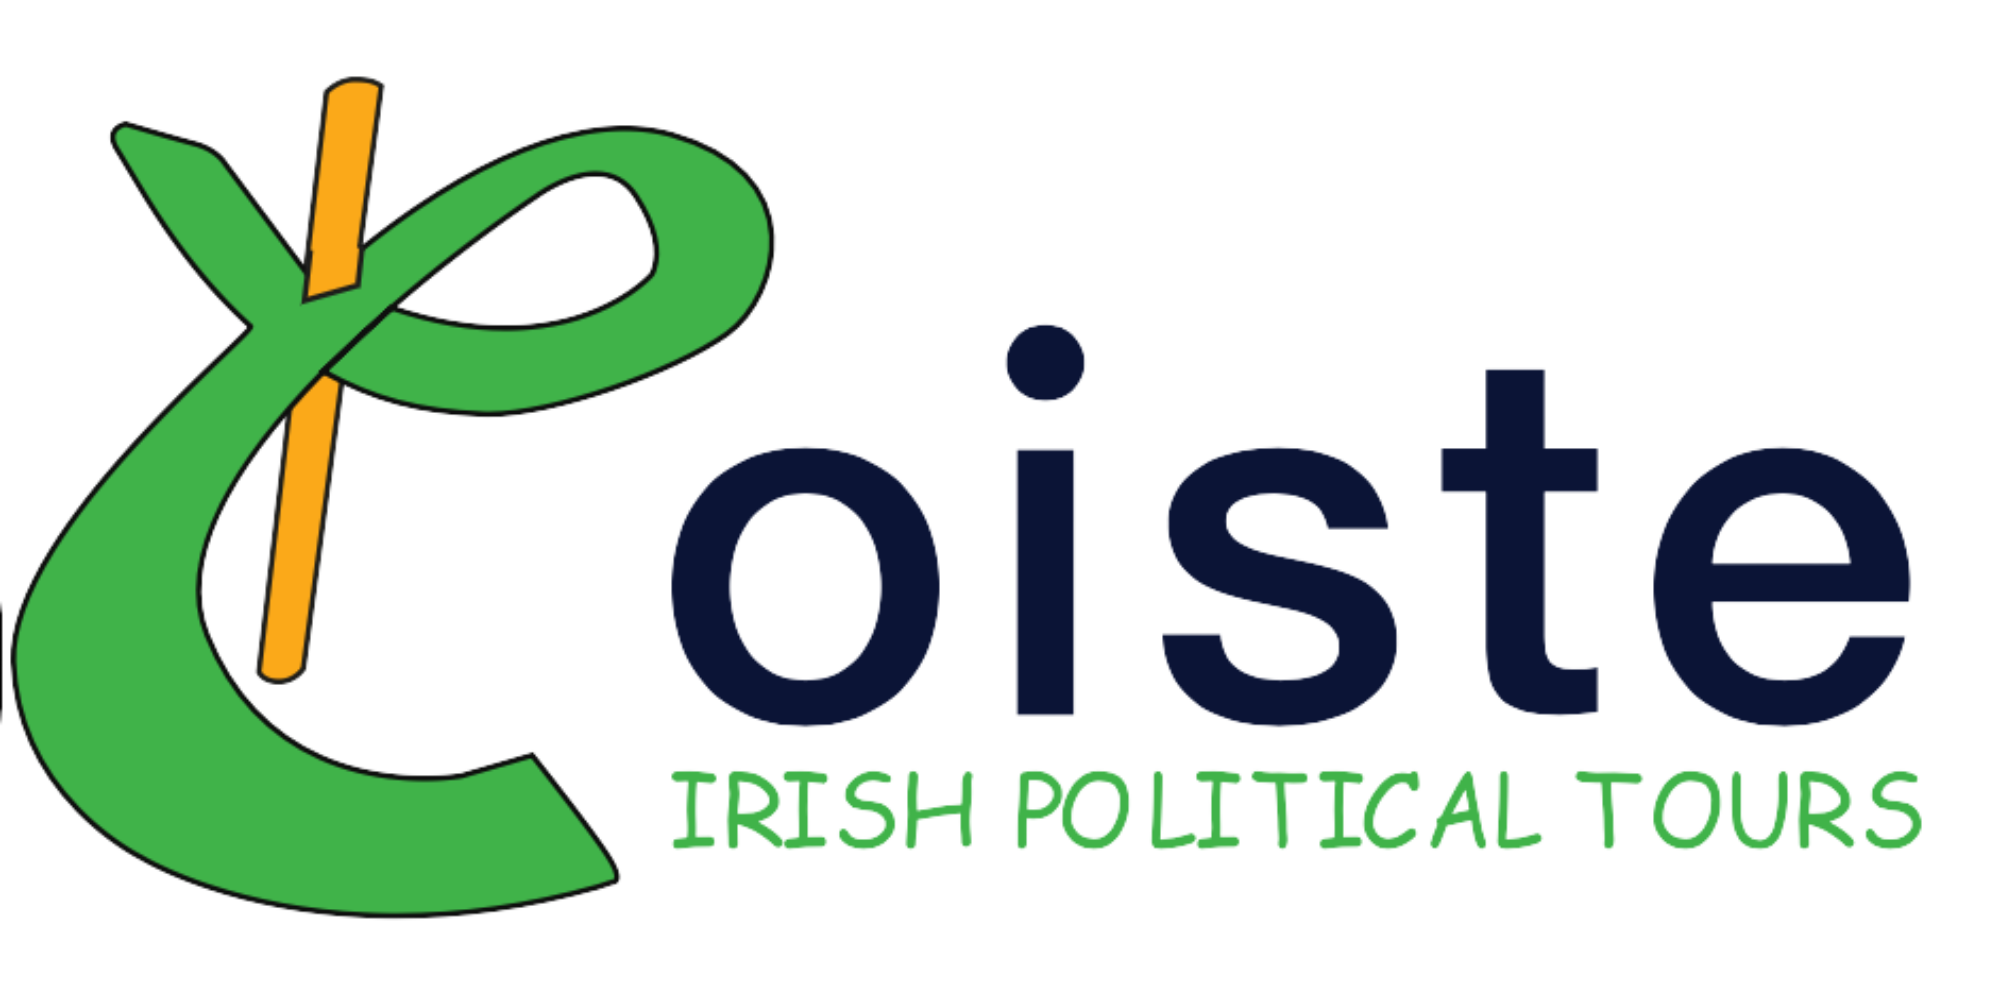 Coiste I Irish Political Tours I Belfast